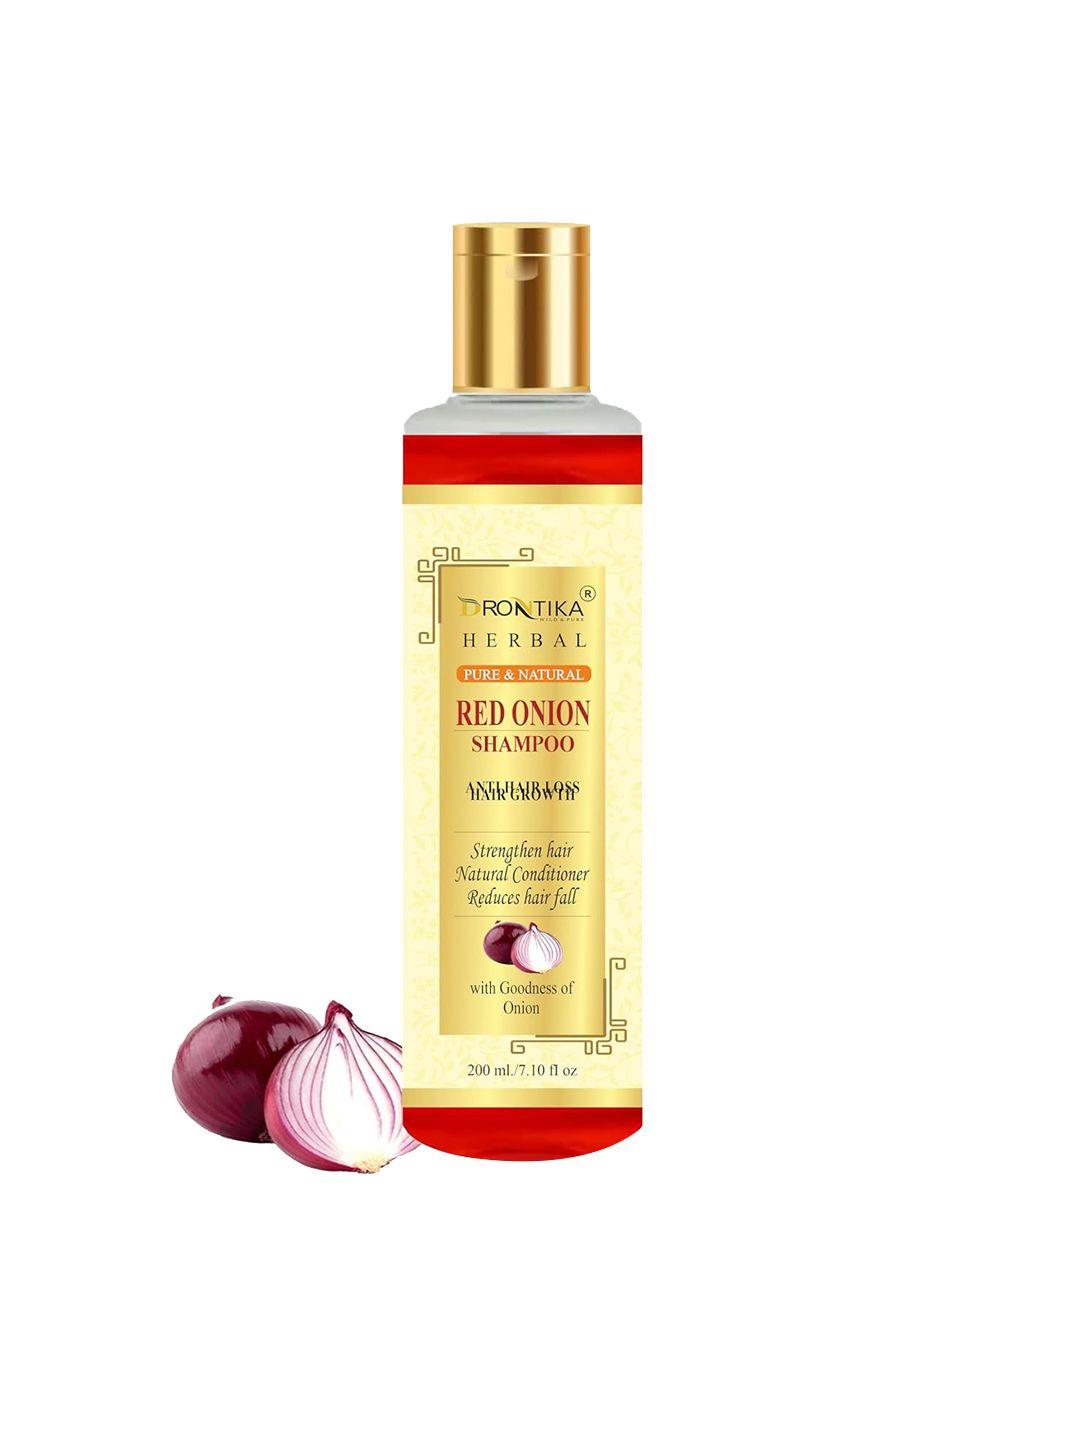 drontika pure & natural red onion shampoo for hair growth - 200ml